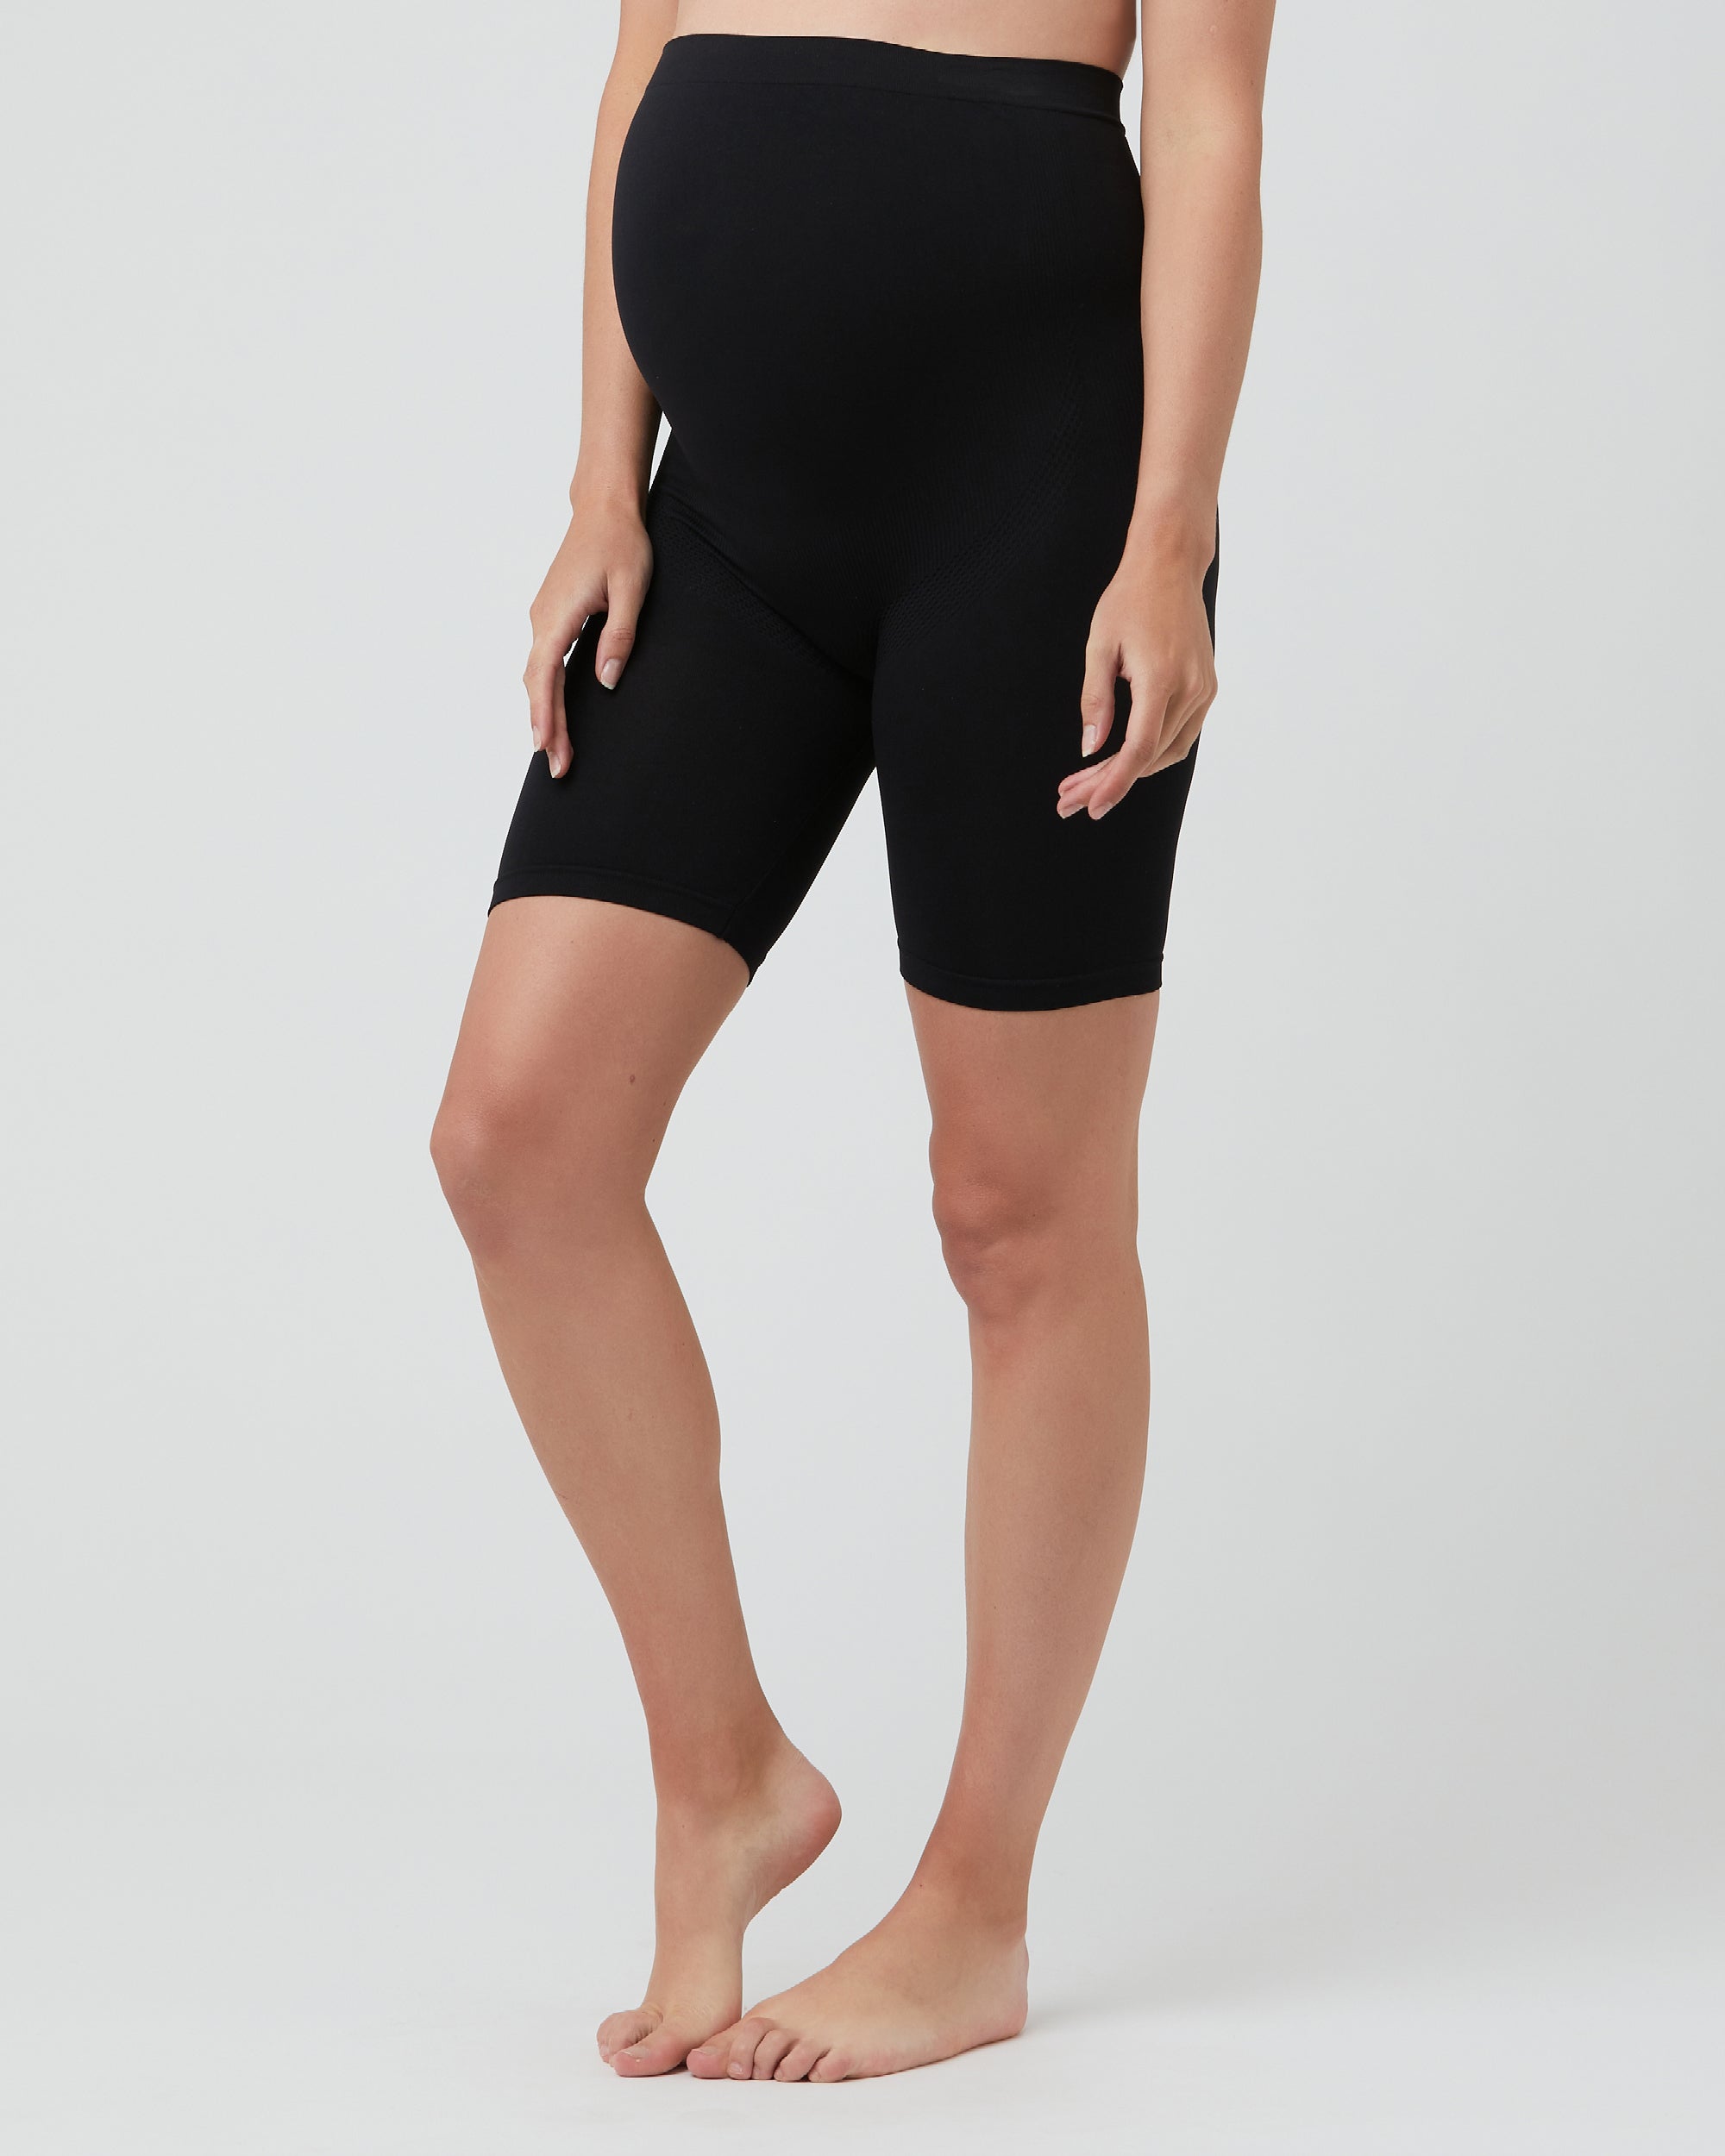 Seamless Support Shorts - Natural